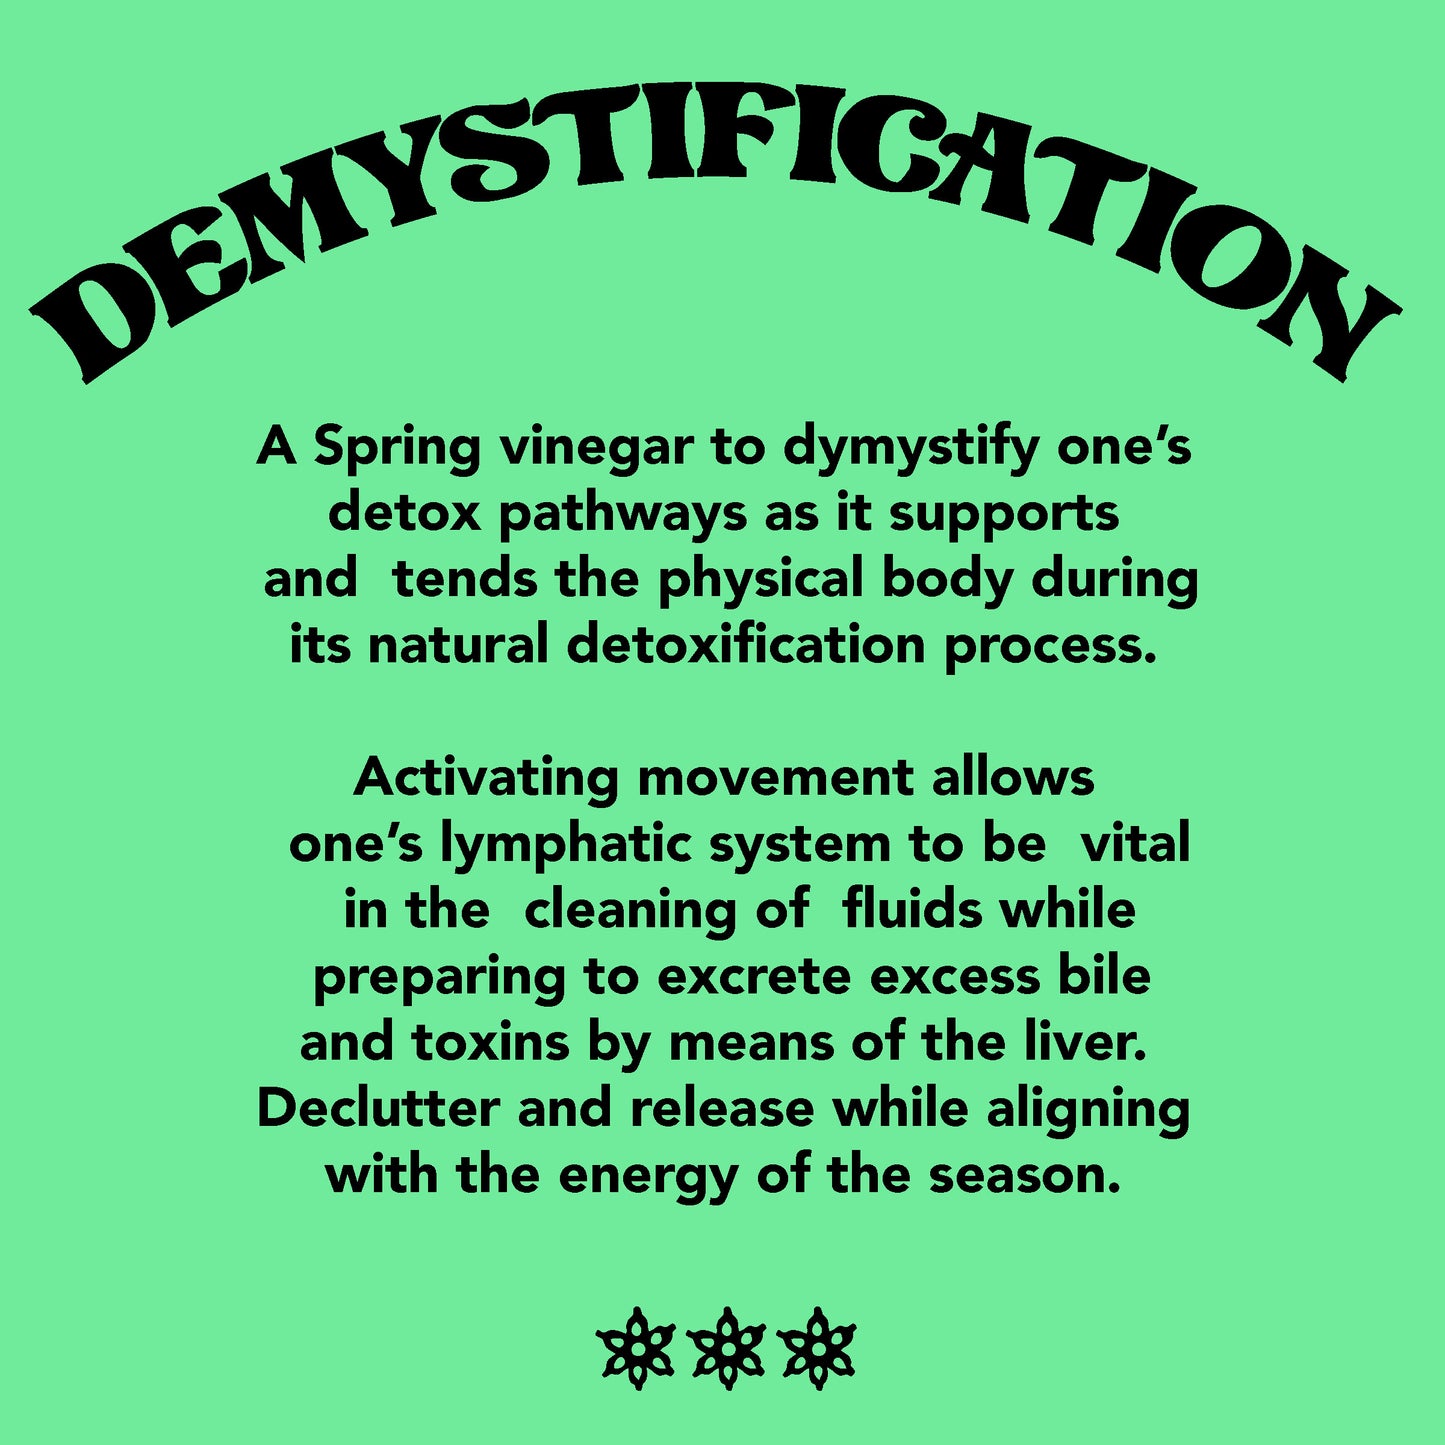 Demystification